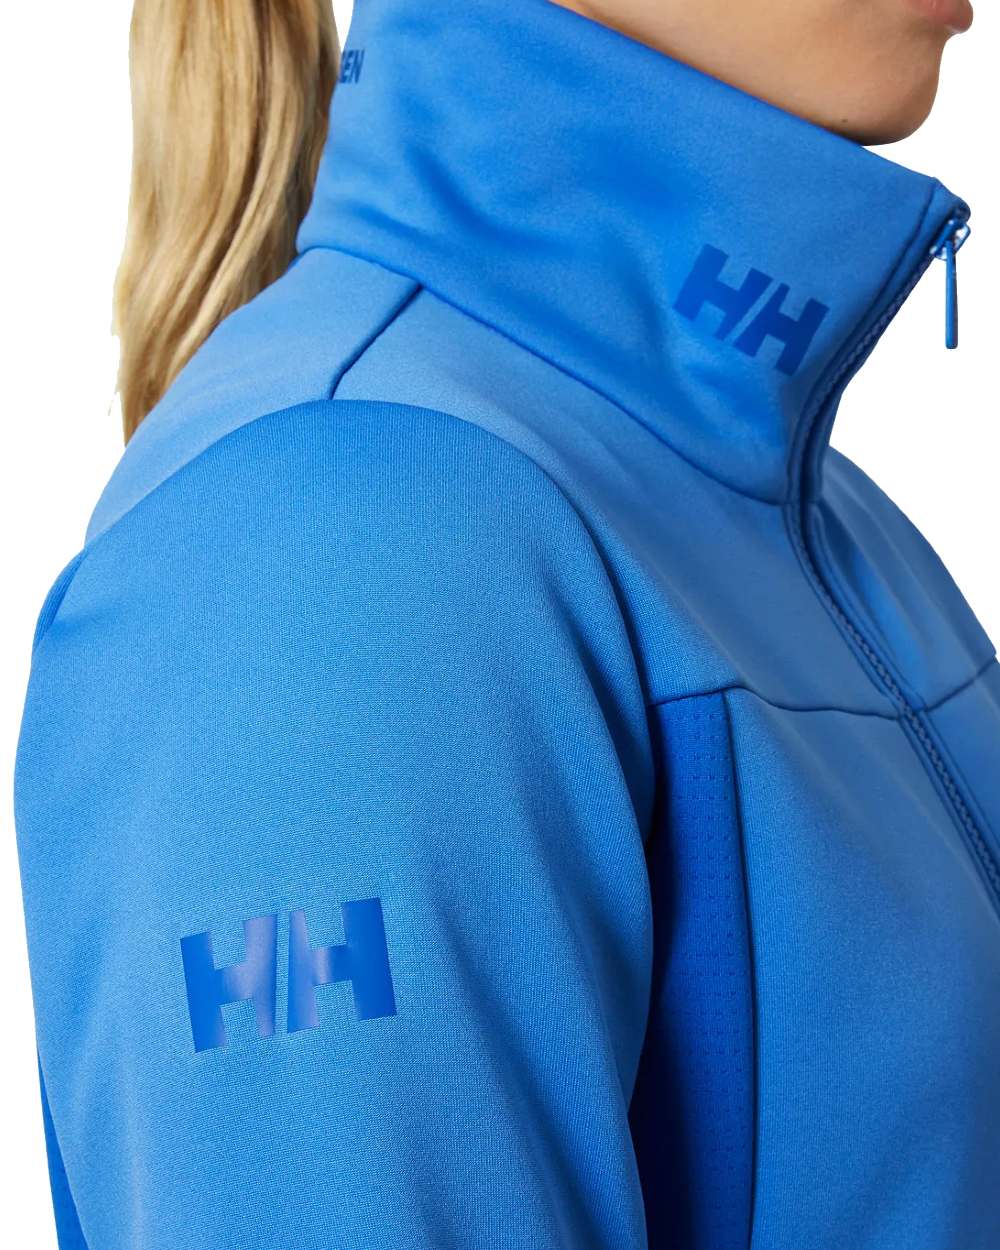 Ultra Blue coloured Helly Hansen Womens Crew Fleece Jacket on white background 